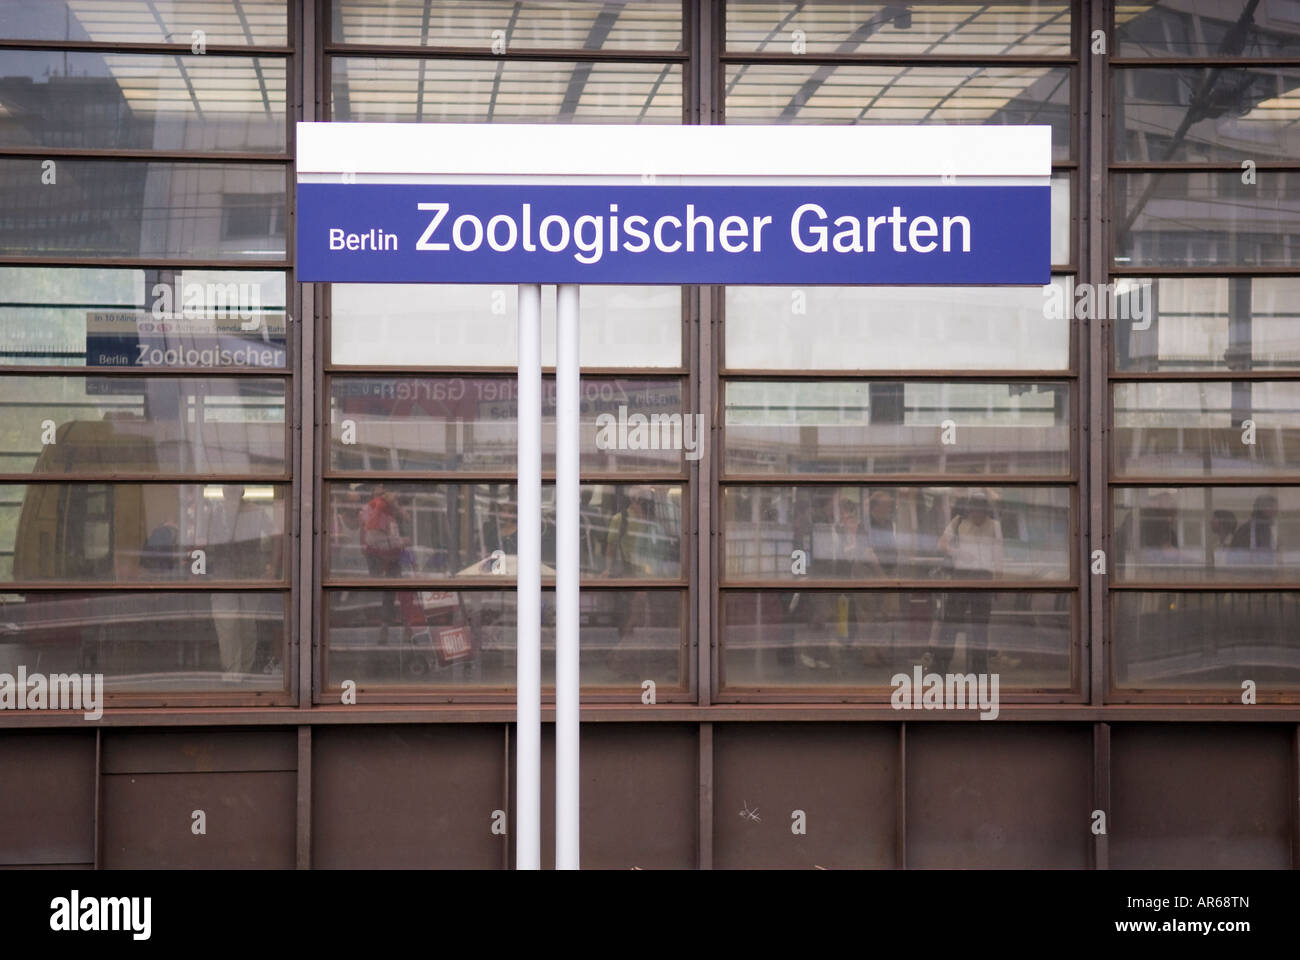 Zoo sign at Bahnhof Zoo Railway Station, Berlin Germany Stock Photo